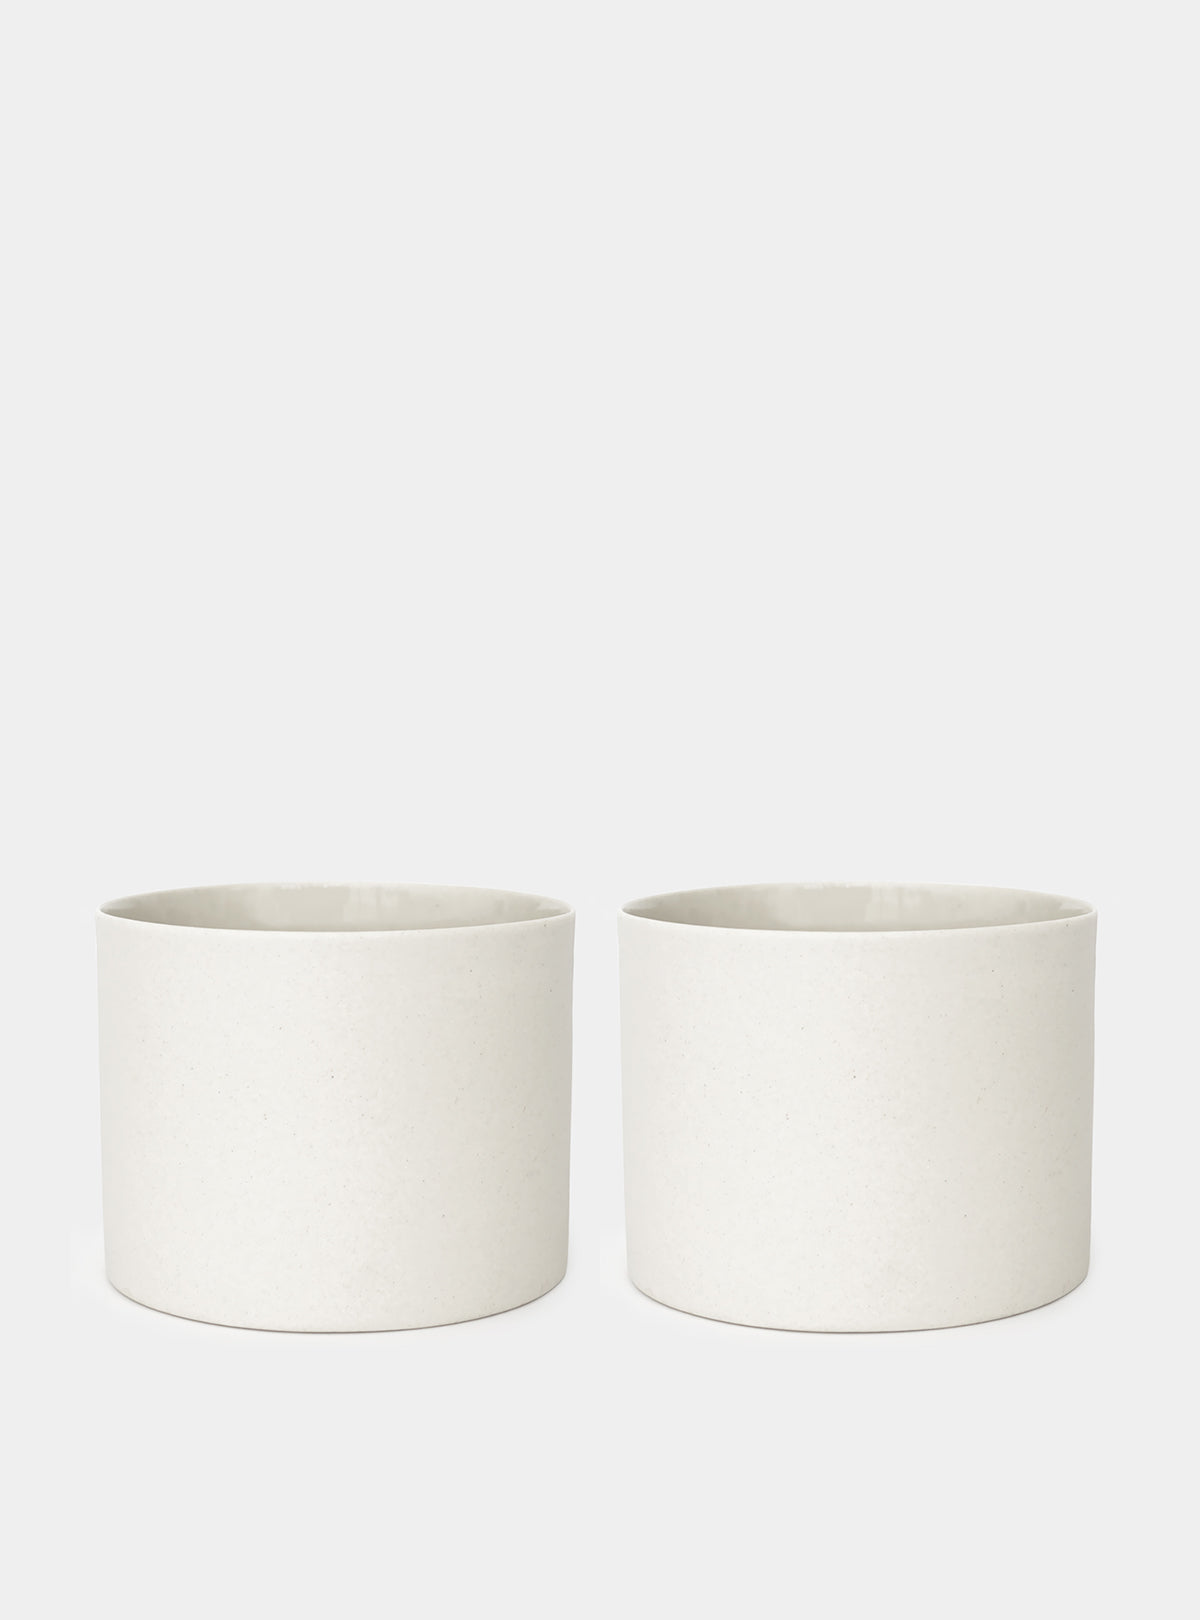 Kobenhavn Cup White - Set of Two